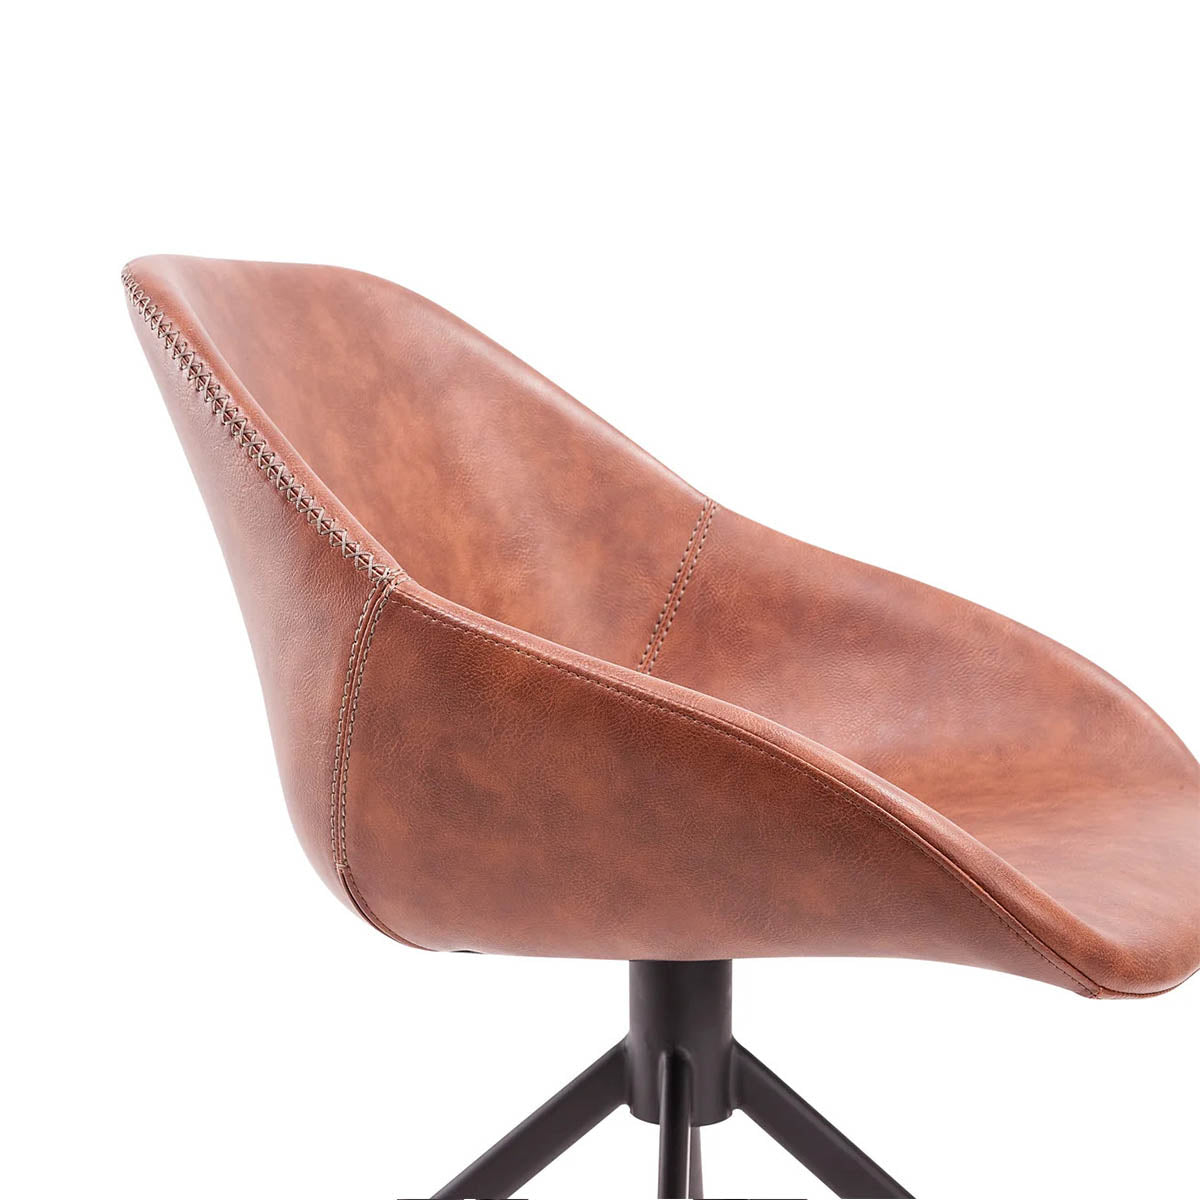 Lansel Swivel Dining Chair (Tan Leather).